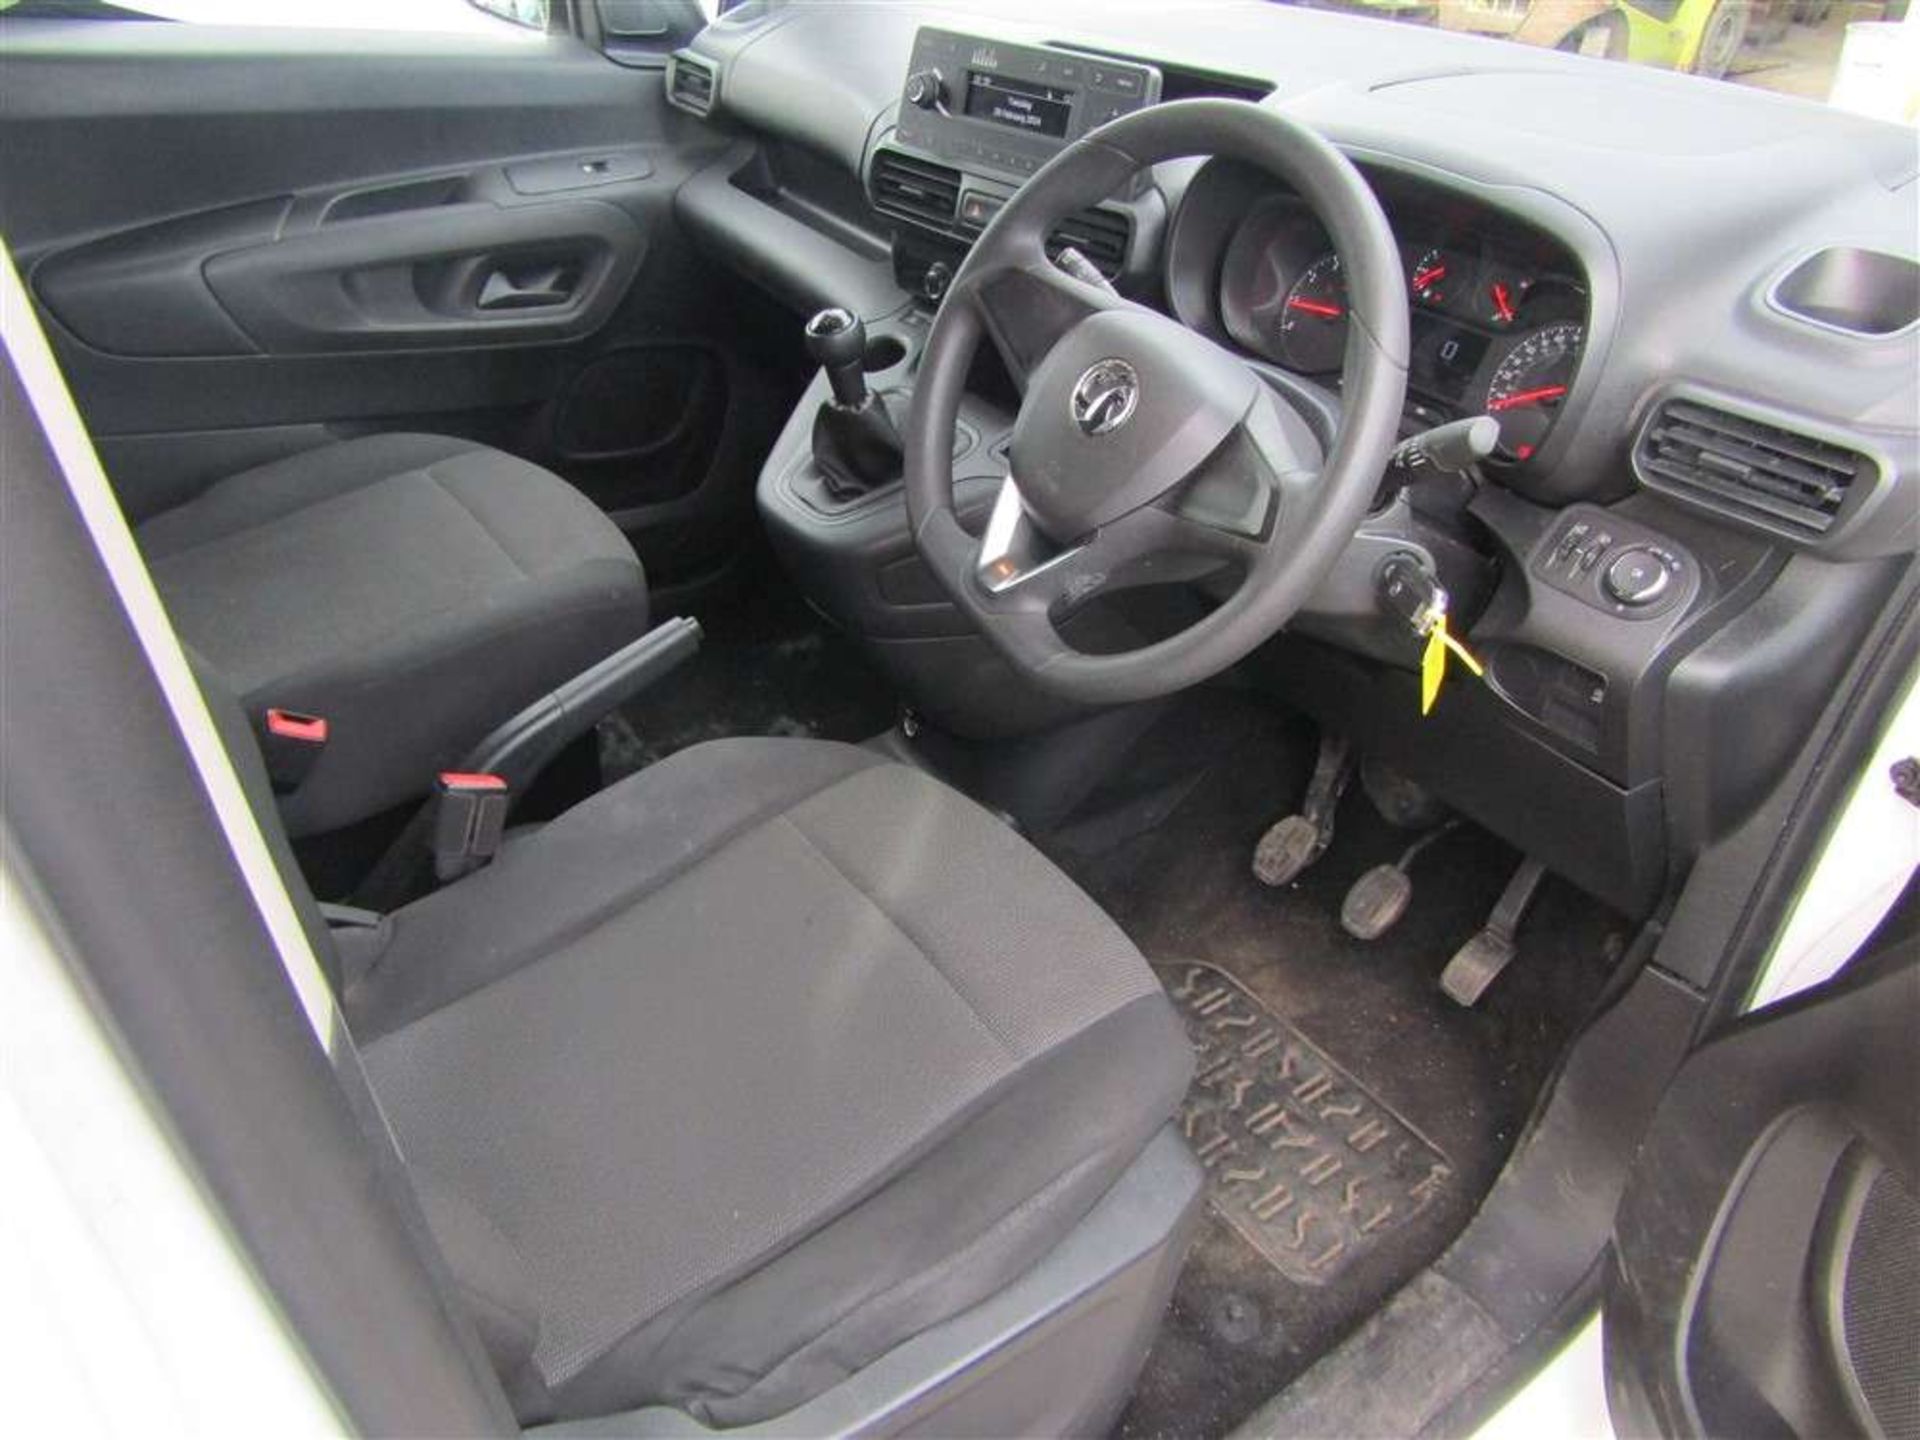 2019 69 reg Vauxhall Combo 2300 Edition S/S - Image 6 of 7